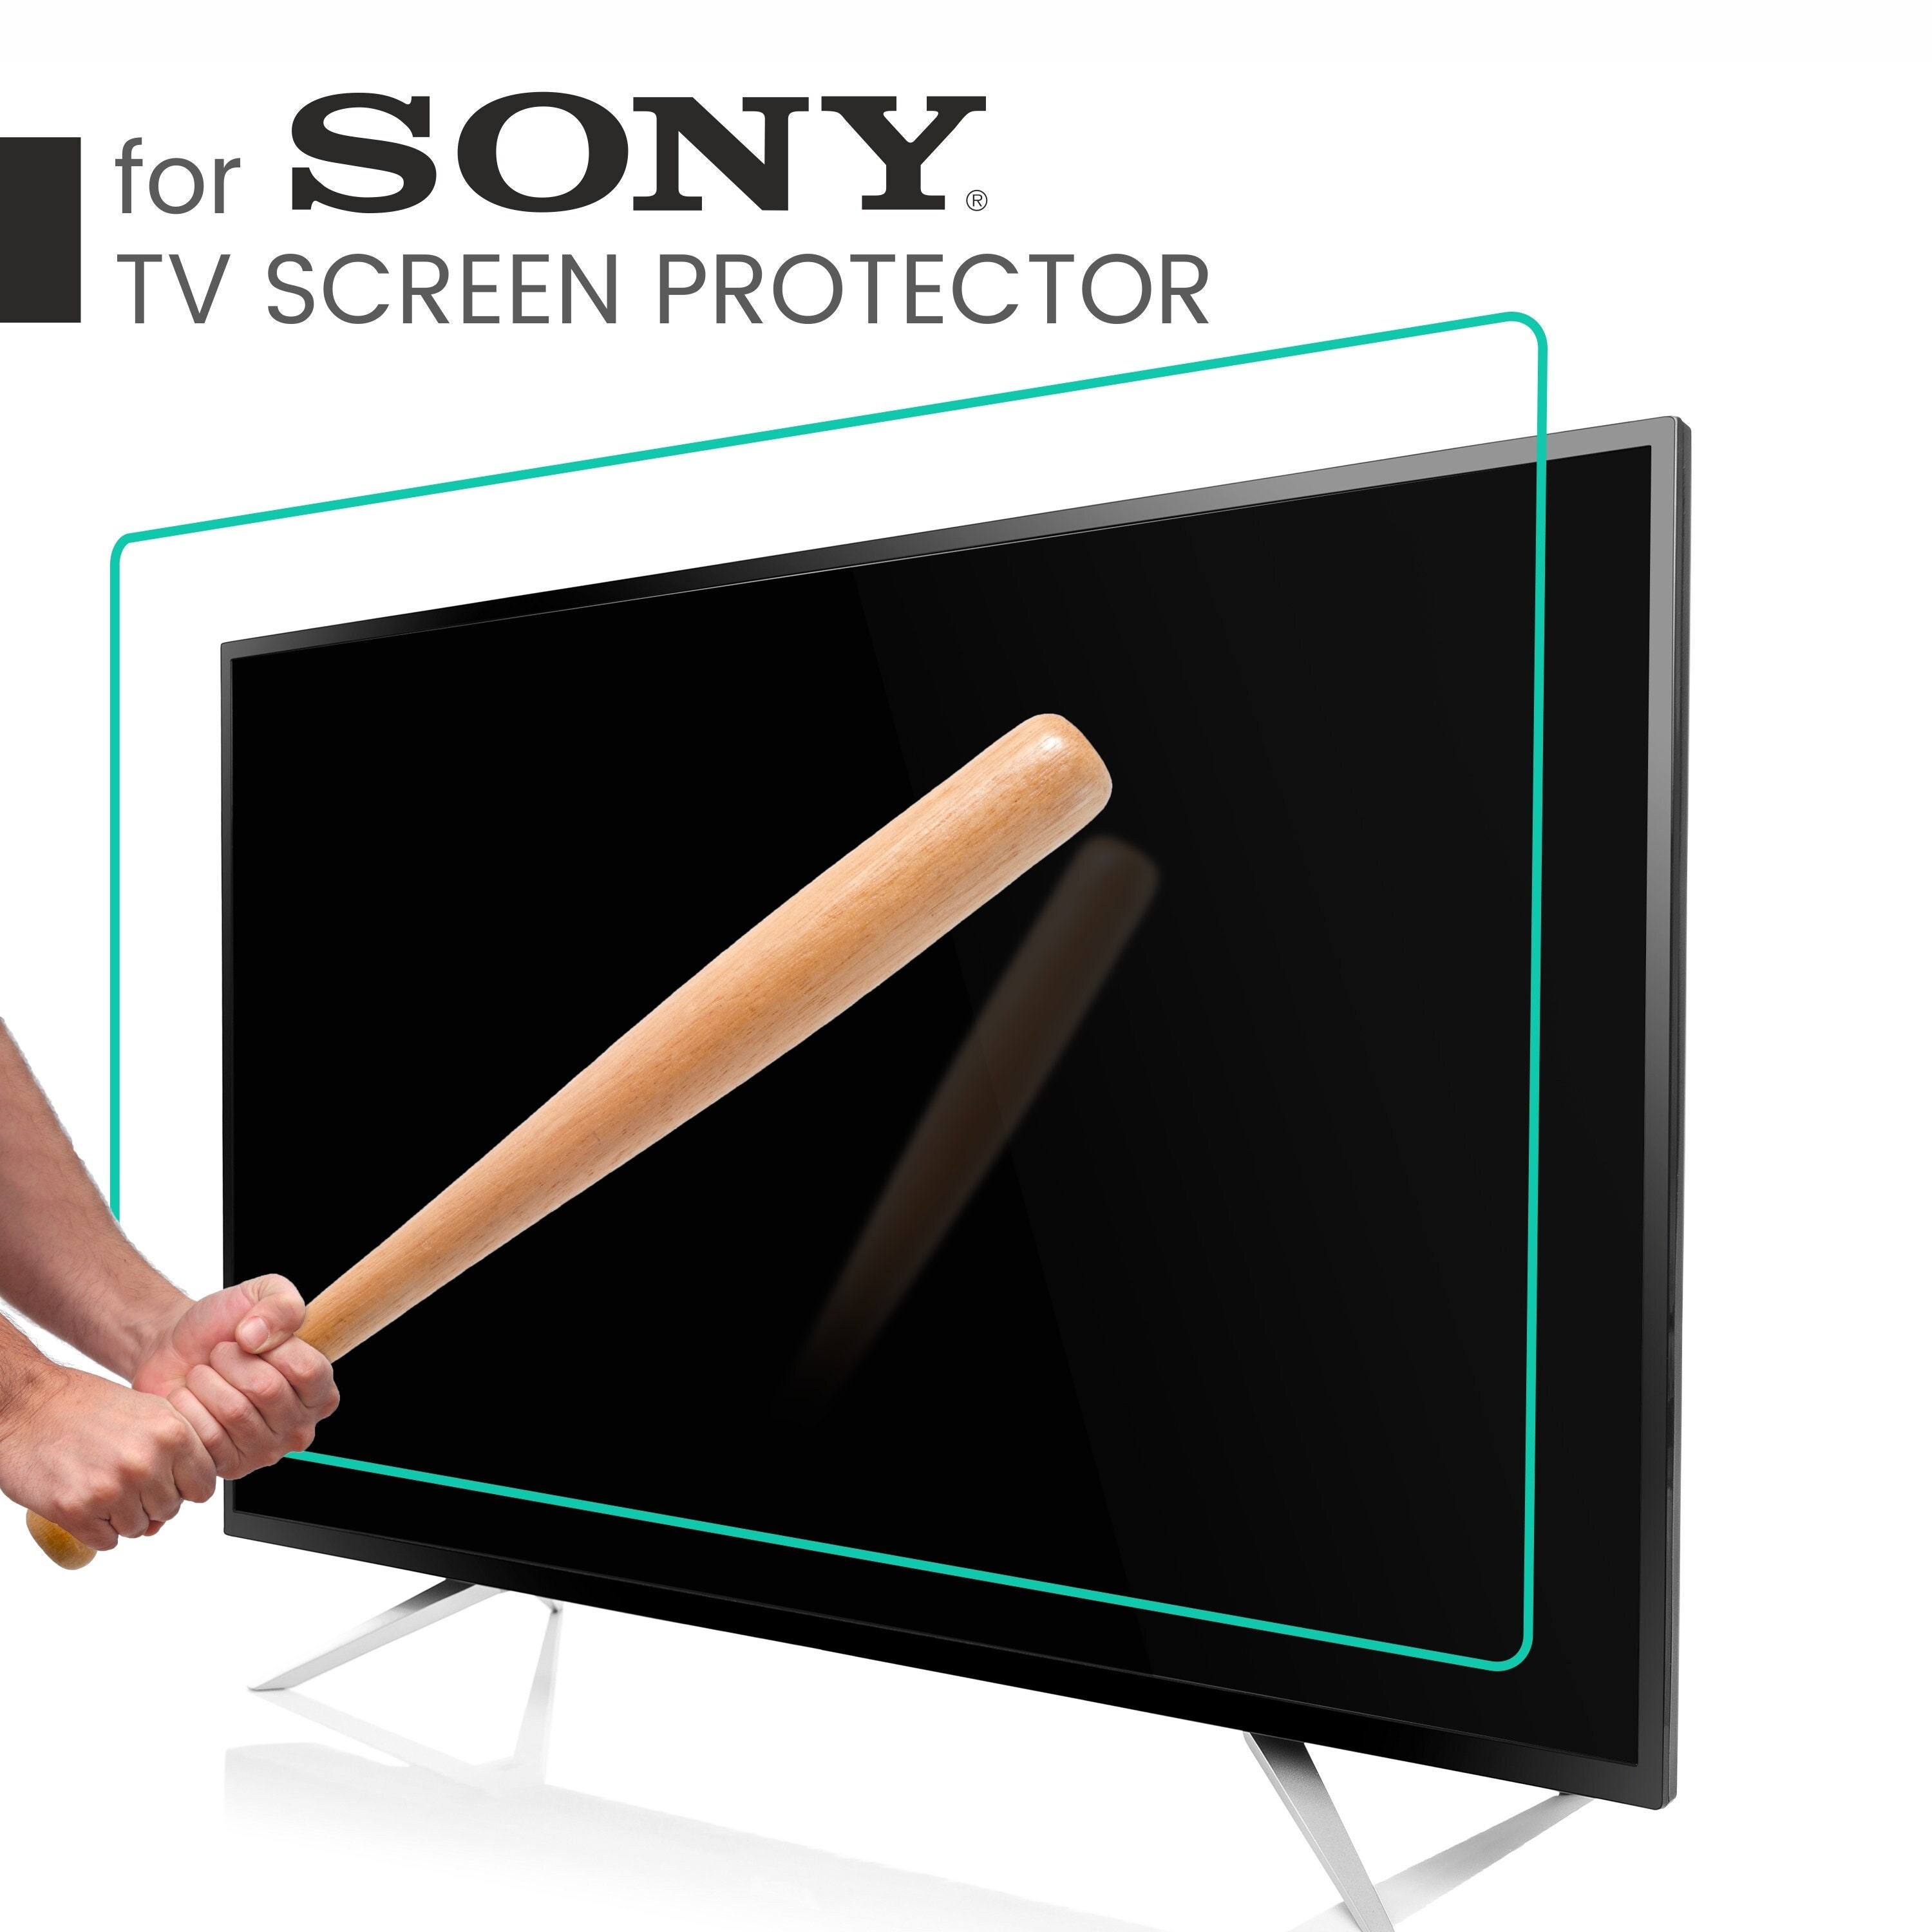 Oferta especial televisor LED 4K LCD 40 pulgadas Smart TV - China